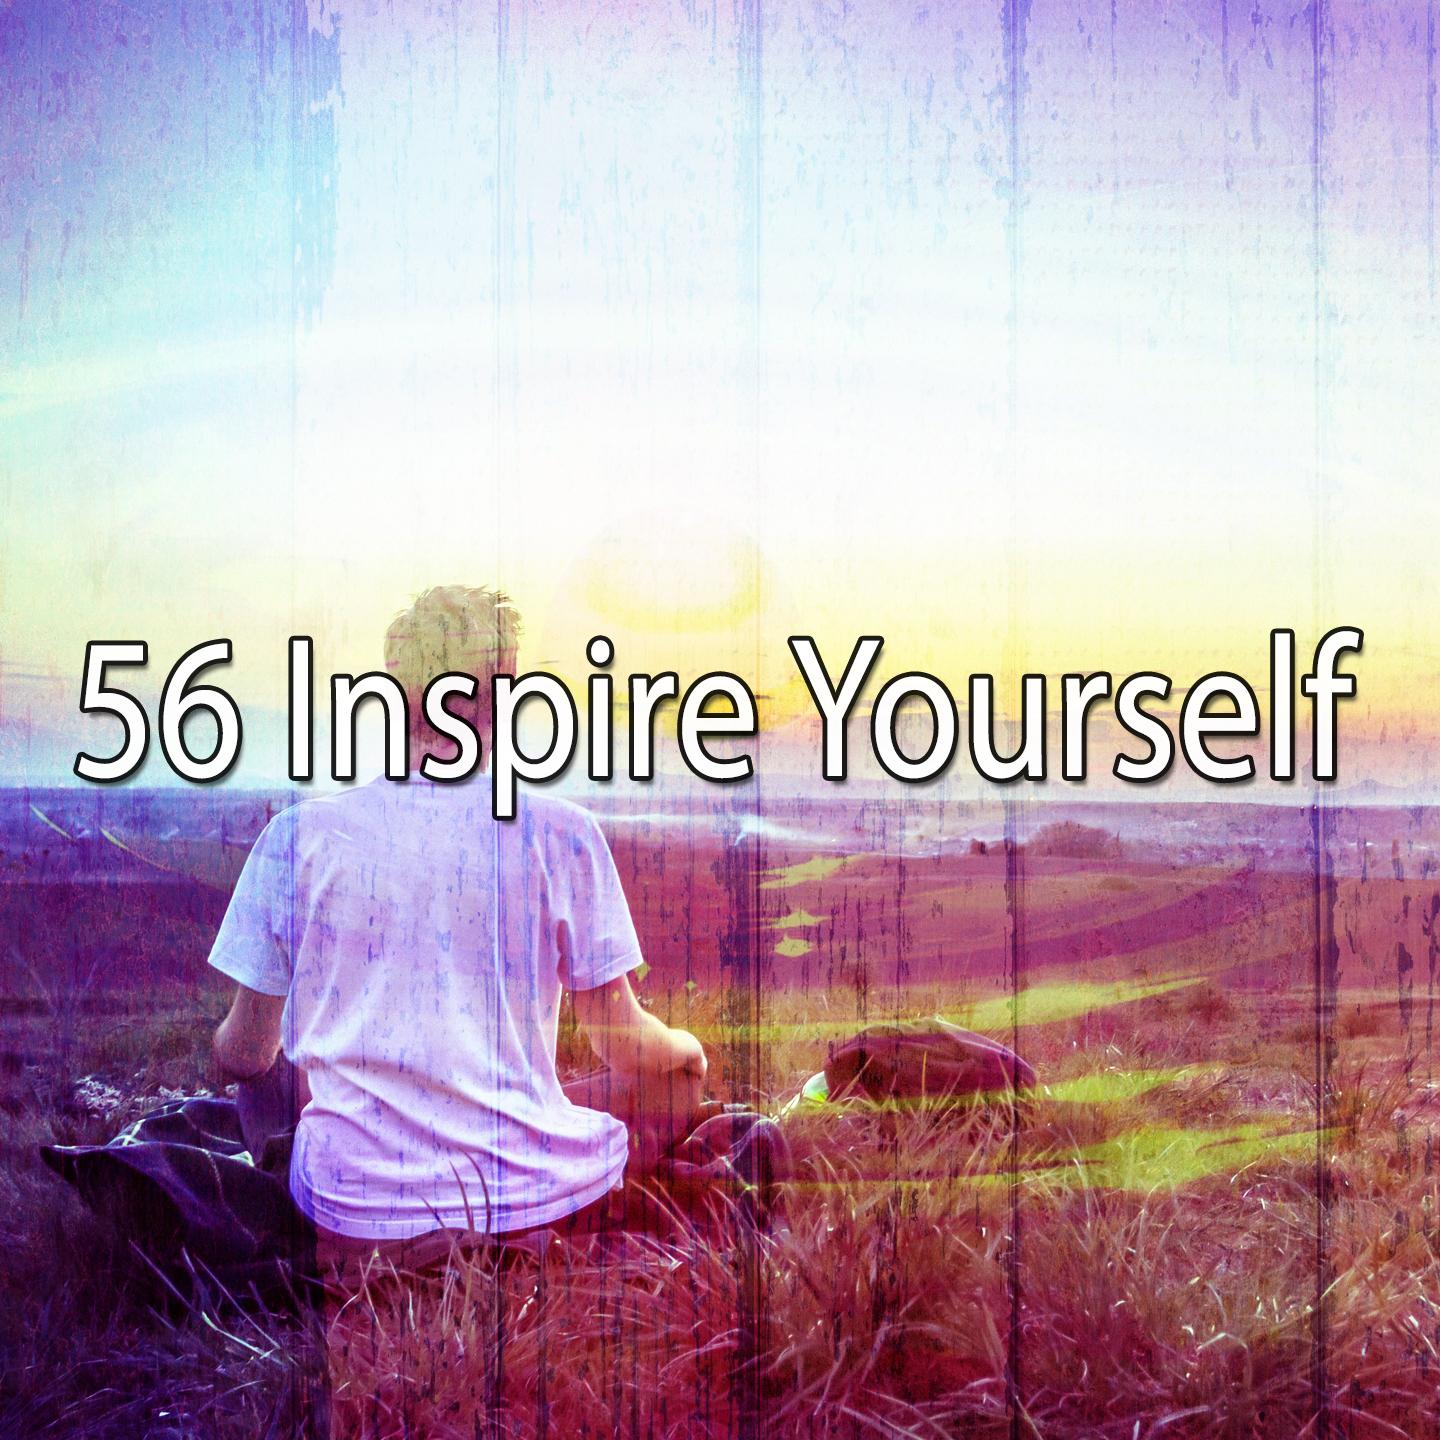 56 Inspire Yourself